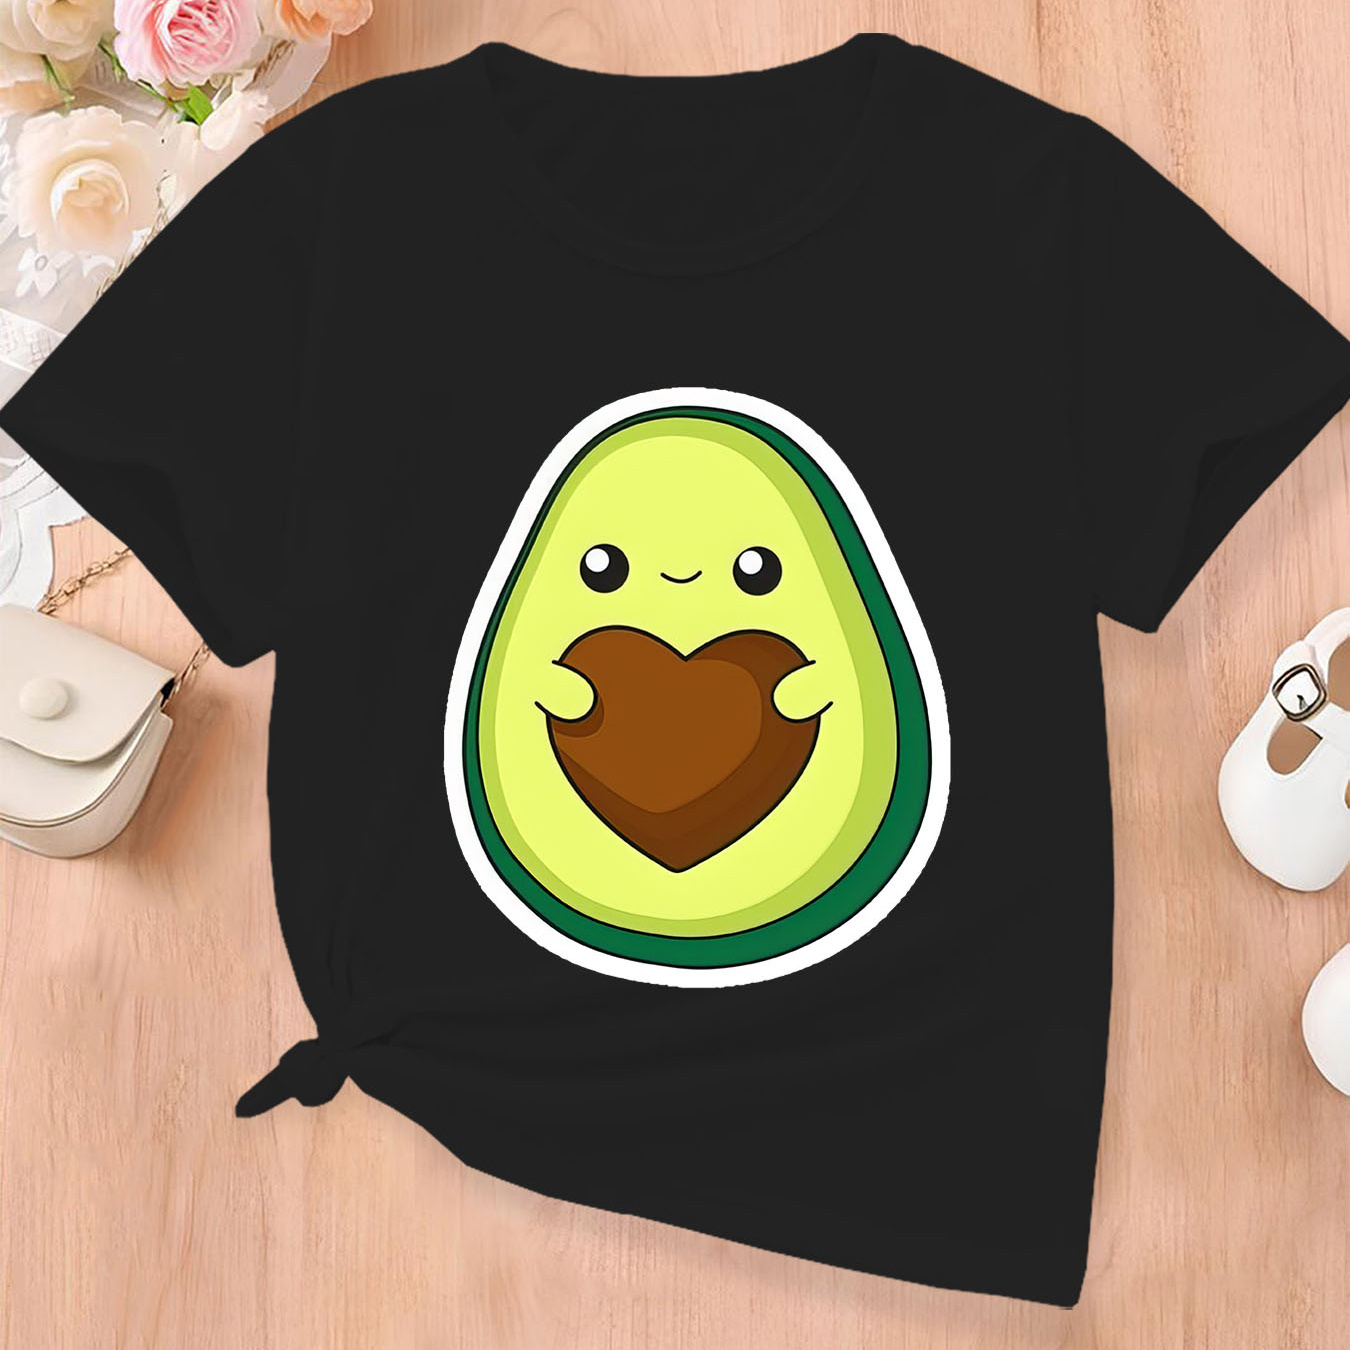 

Cute Avocado Graphic Print Creative T-shirts, Soft & Elastic Comfy Crew Neck Short Sleeve Tee, Girls' Summer Tops